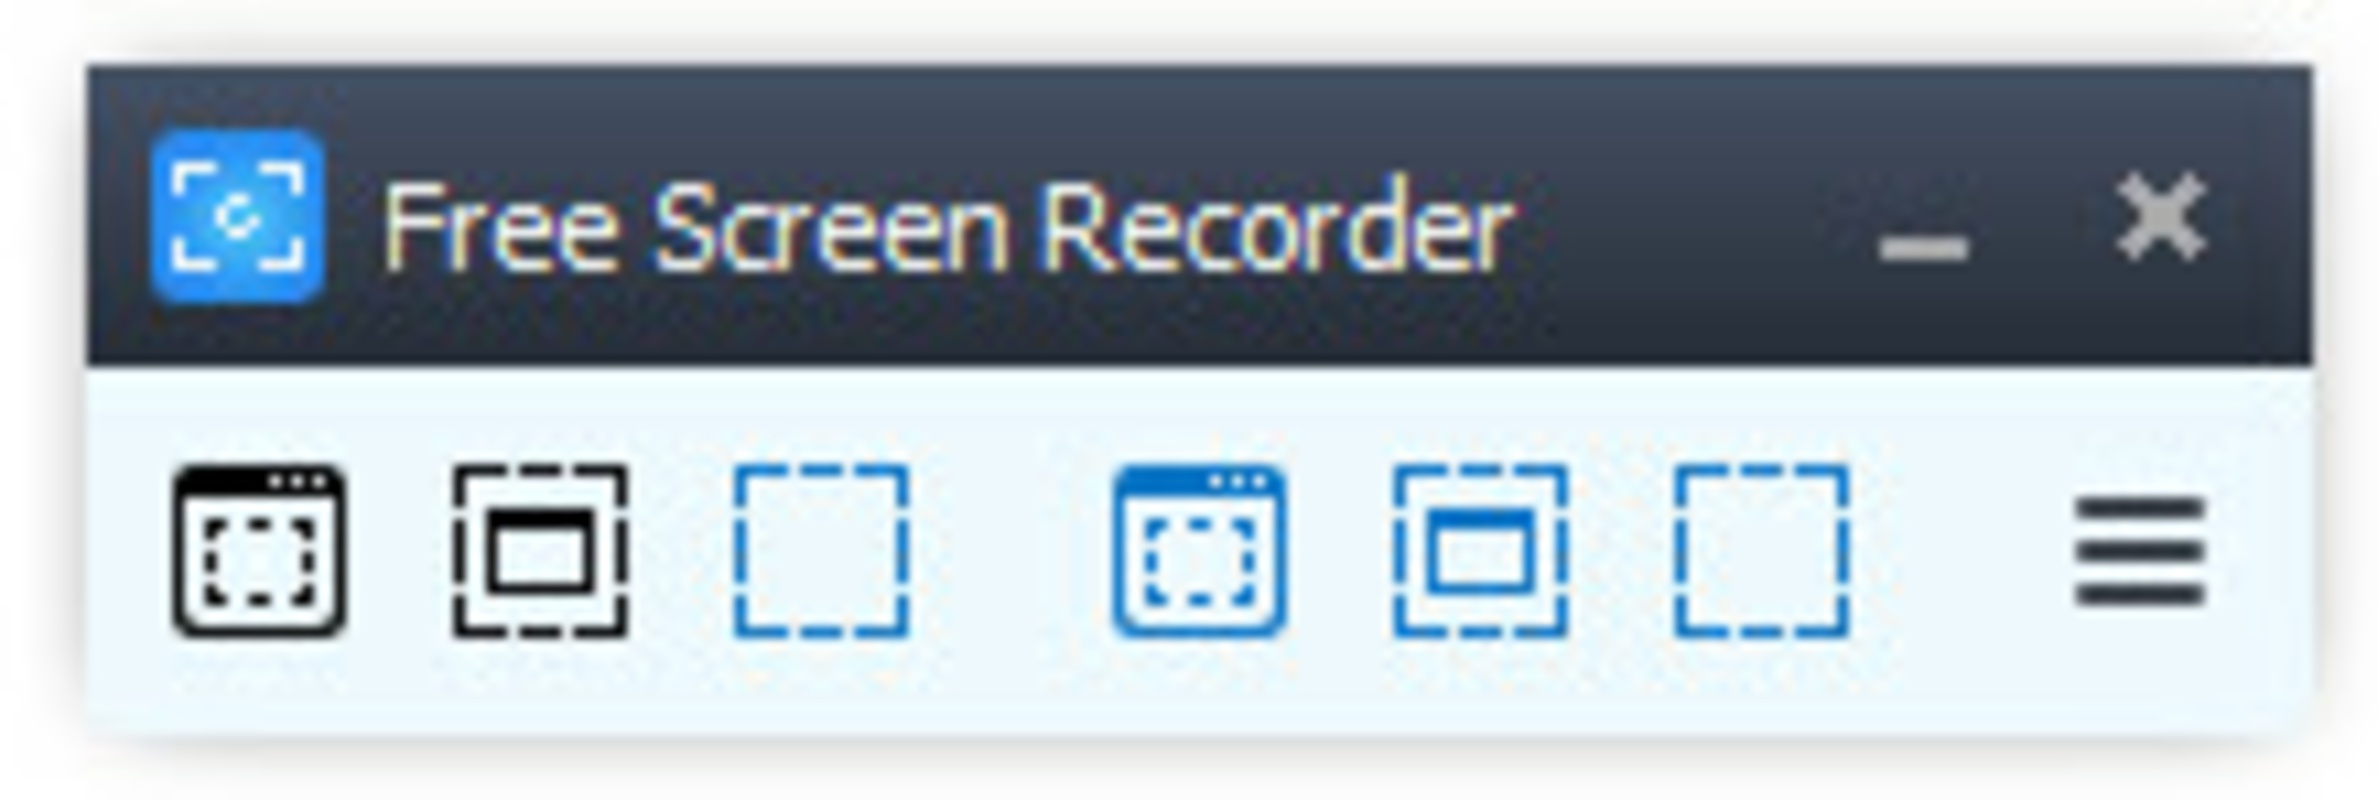 Free Screen Video Recorder 3.1.1.1024 for Windows Screenshot 1